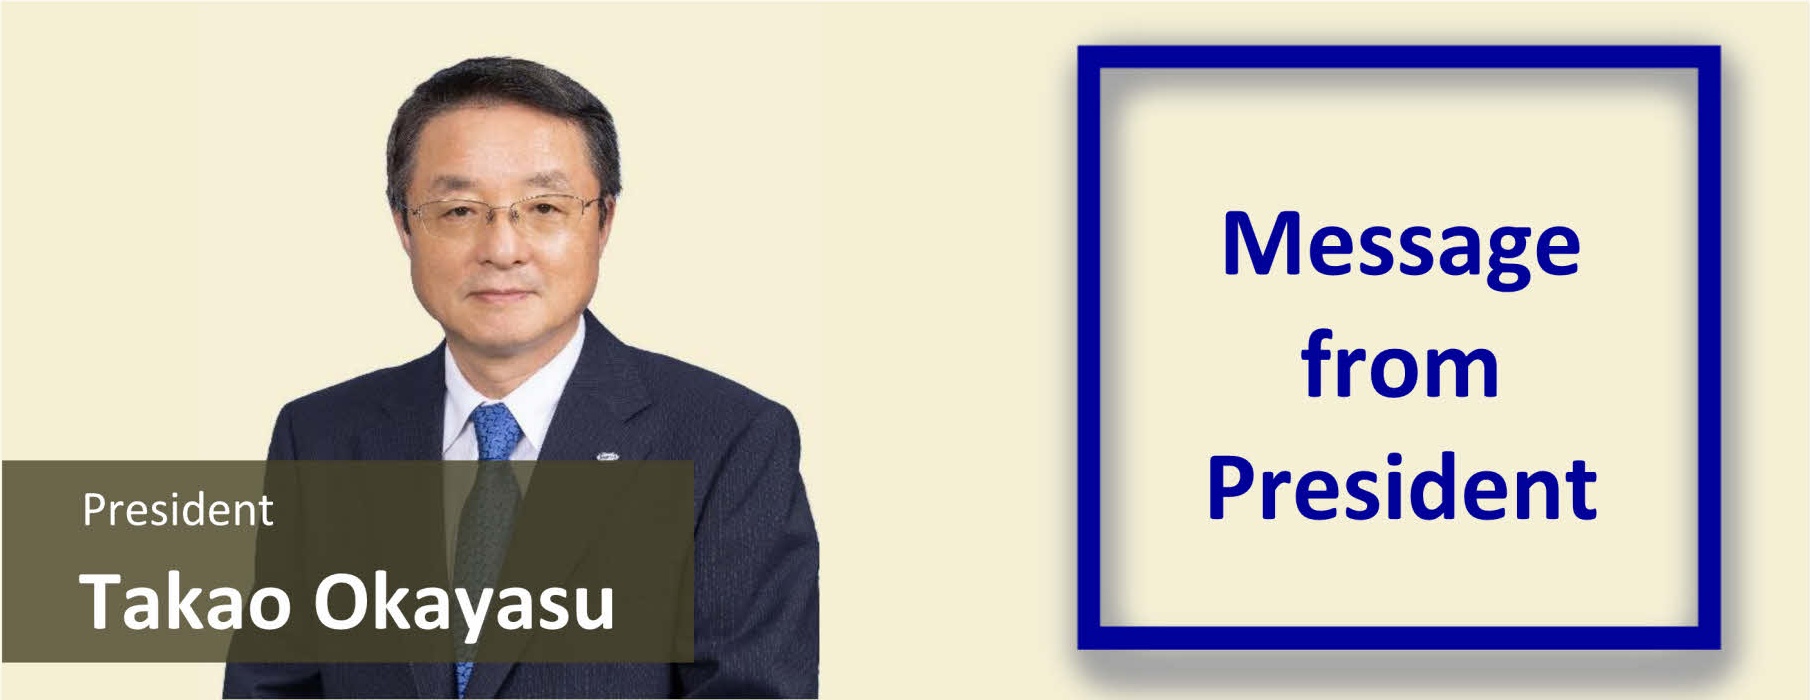 Message from President  President Takao Okayasu